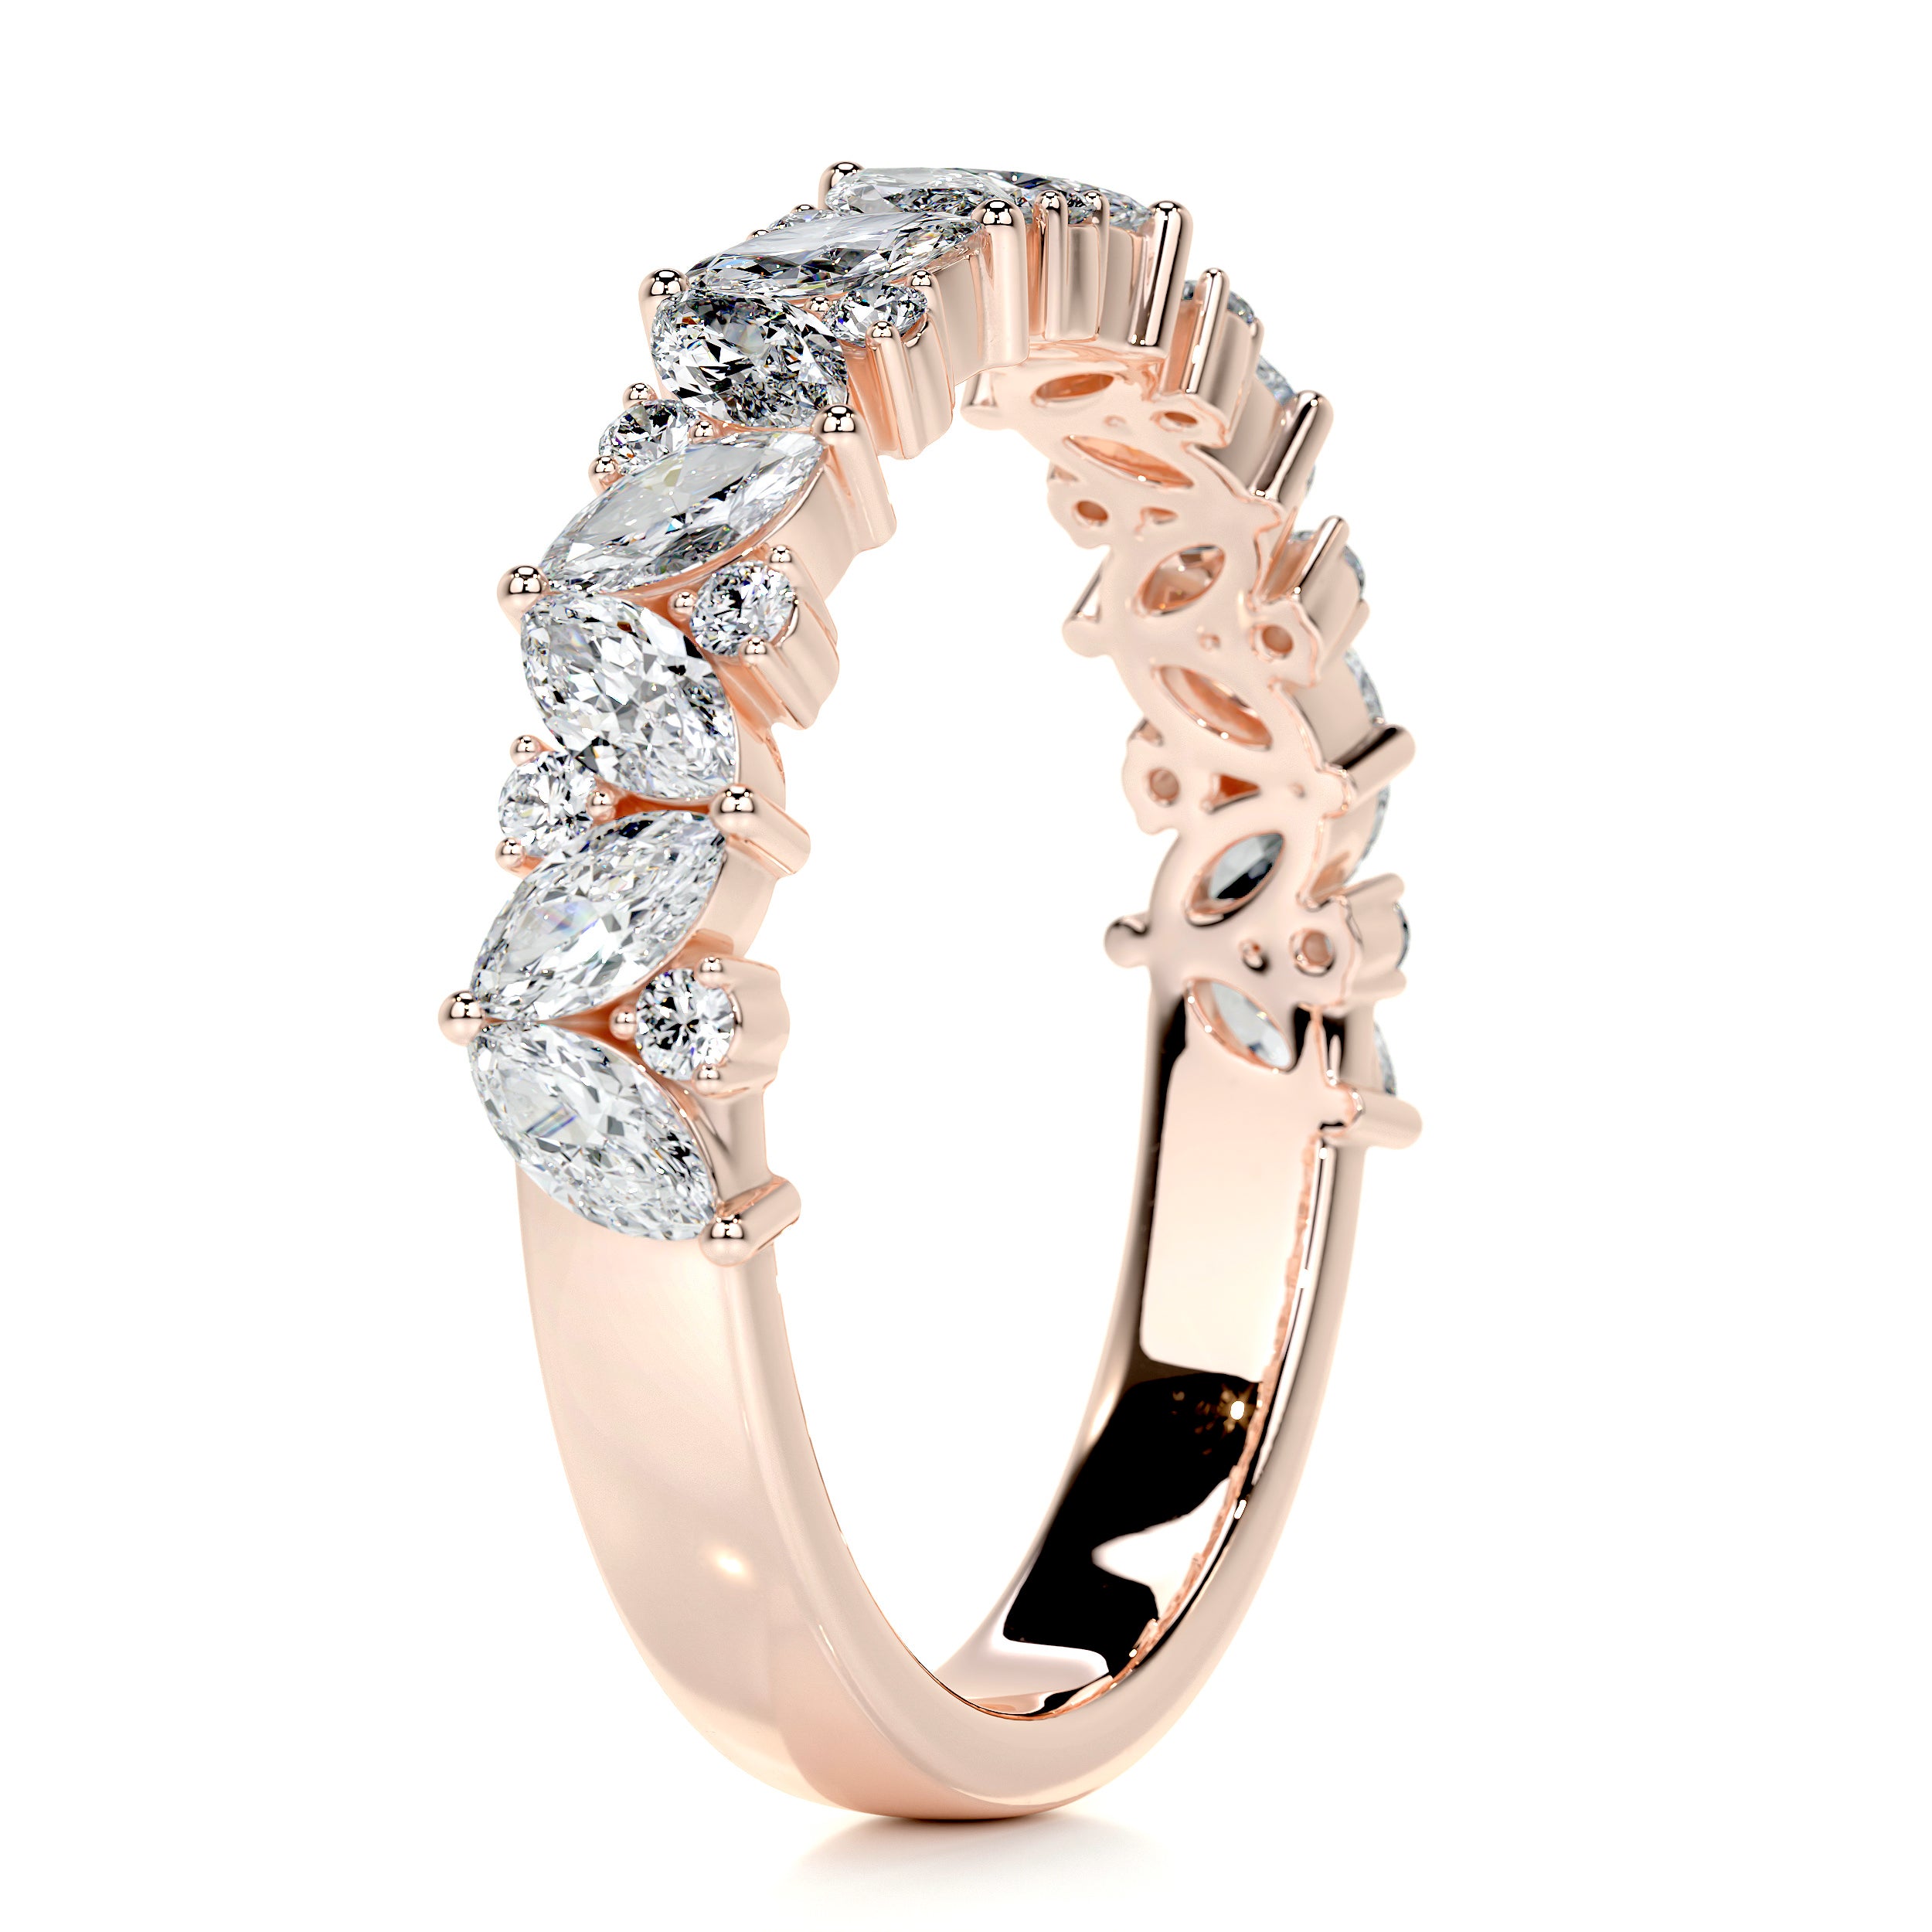 Regina Diamond Wedding Ring   (0.85 Carat) -14K Rose Gold